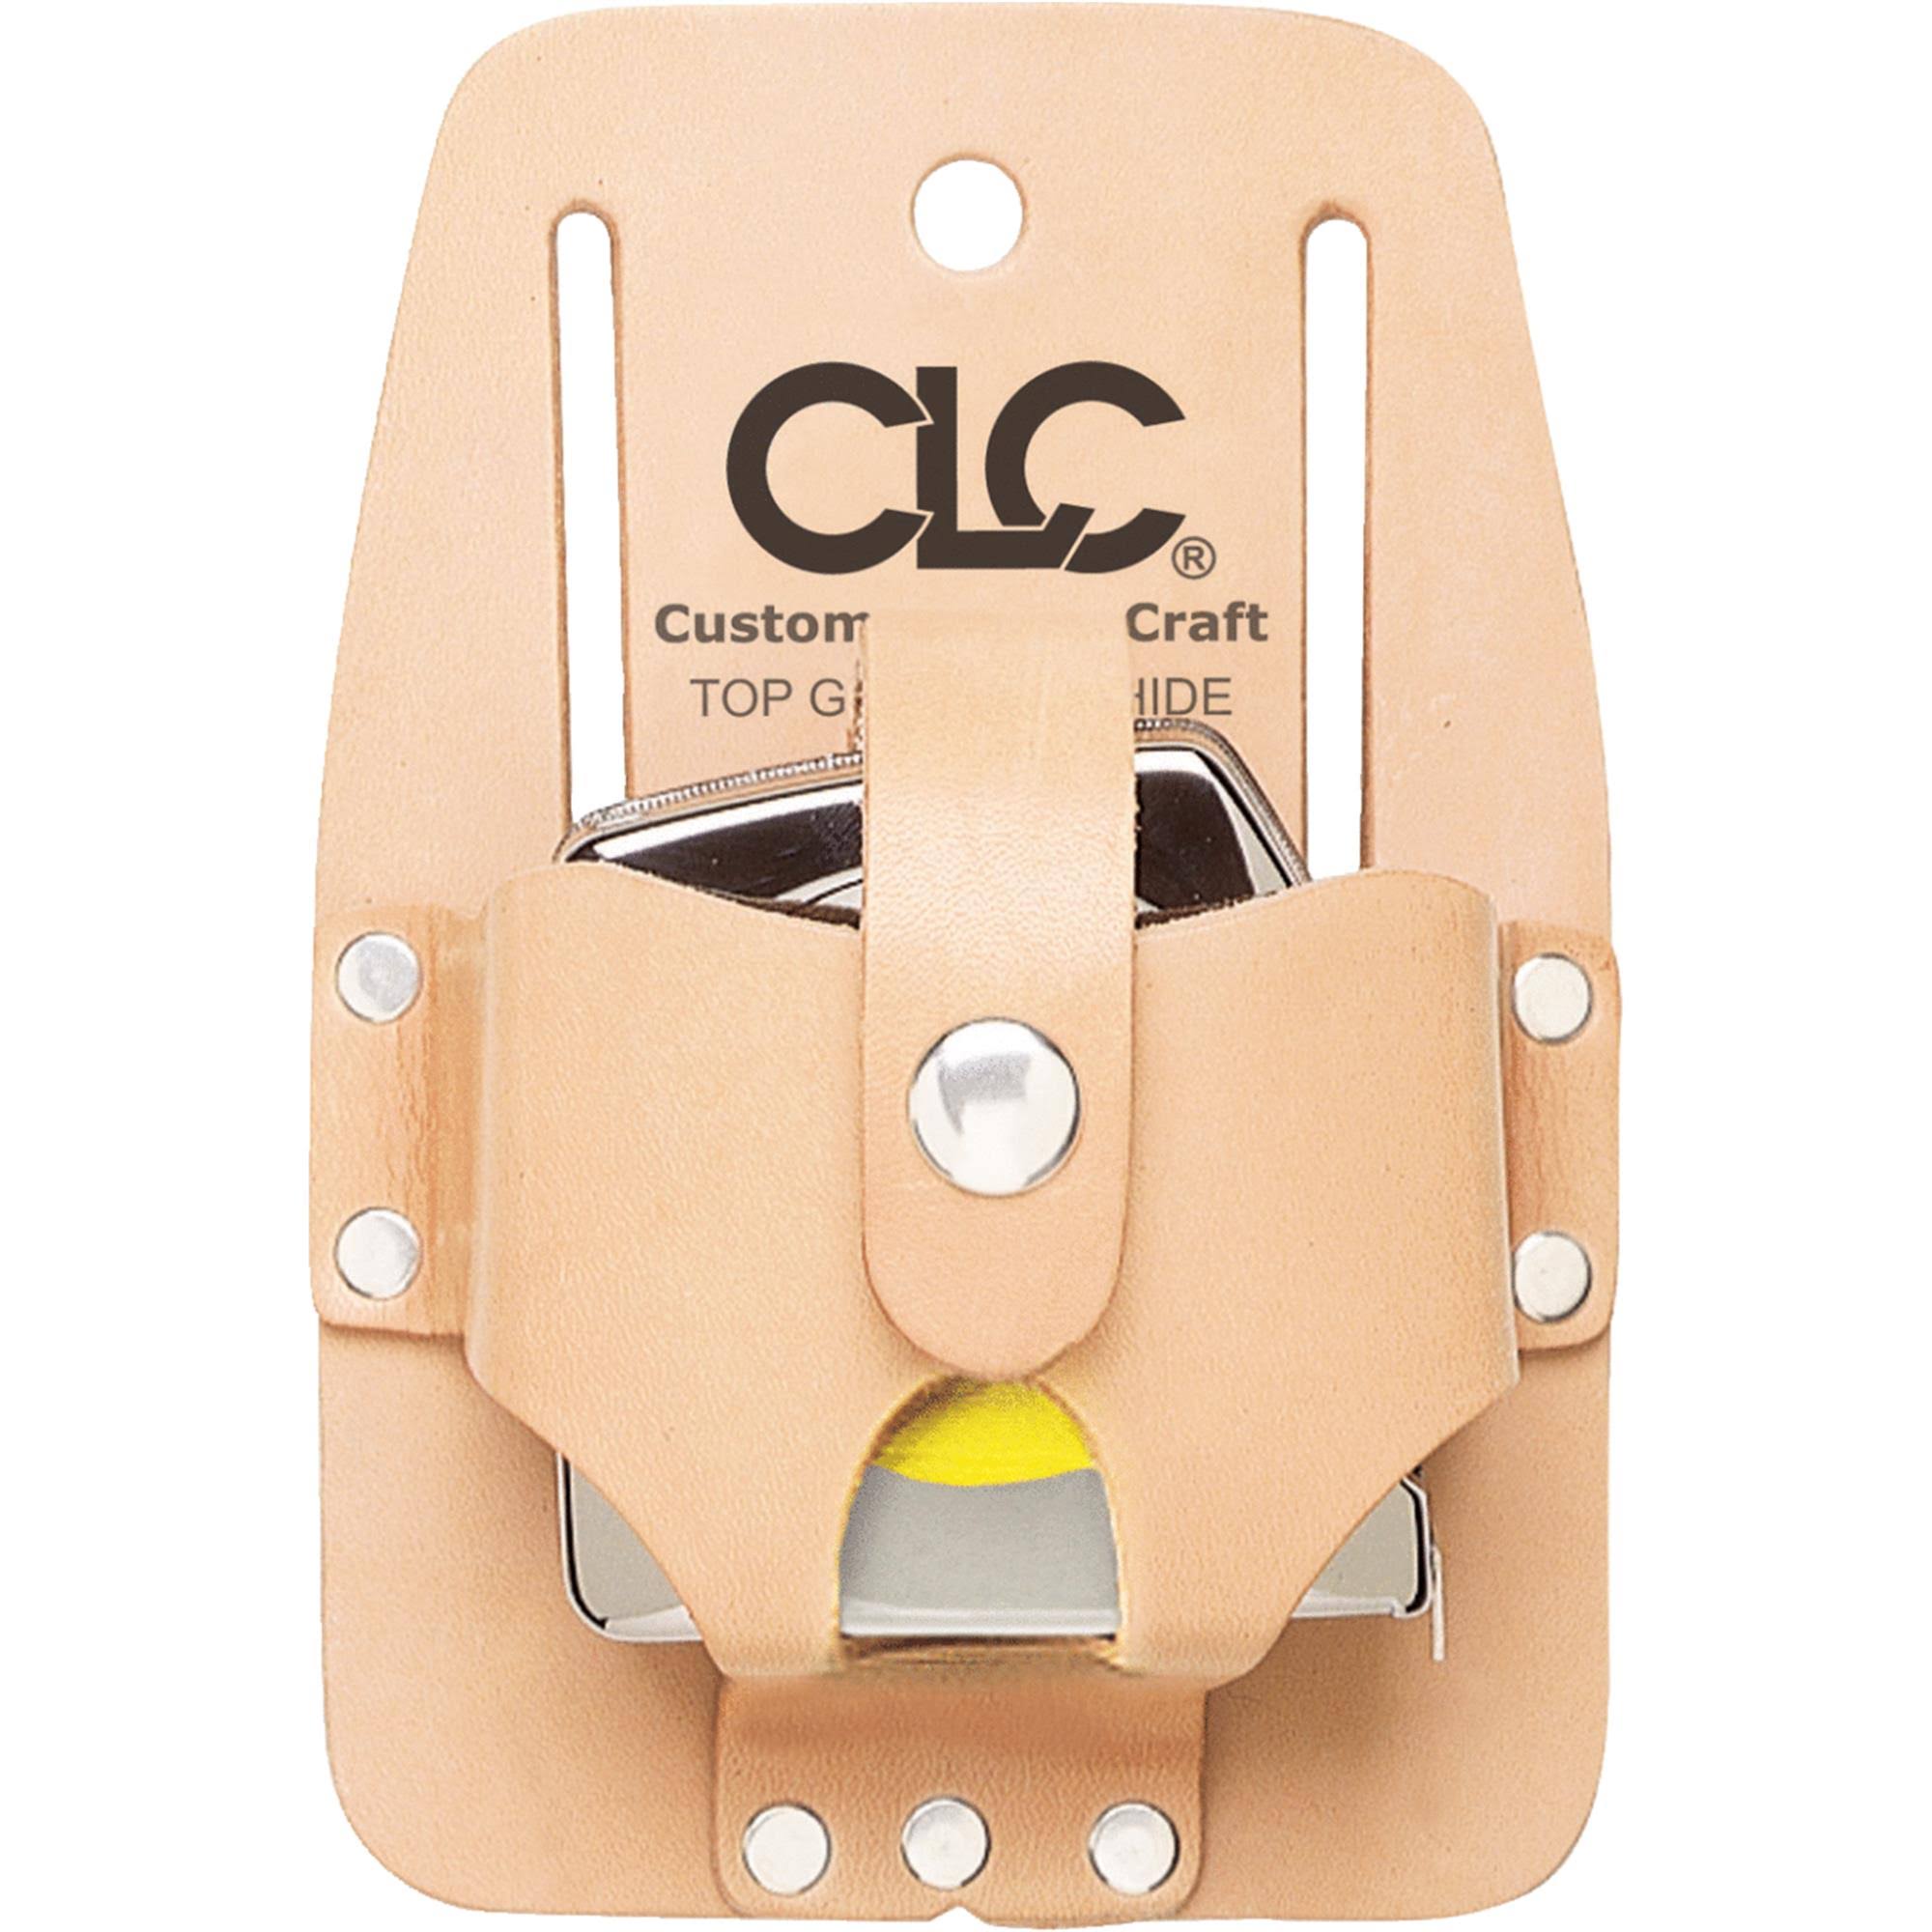 Custom Leathercraft Measuring Tape Holder